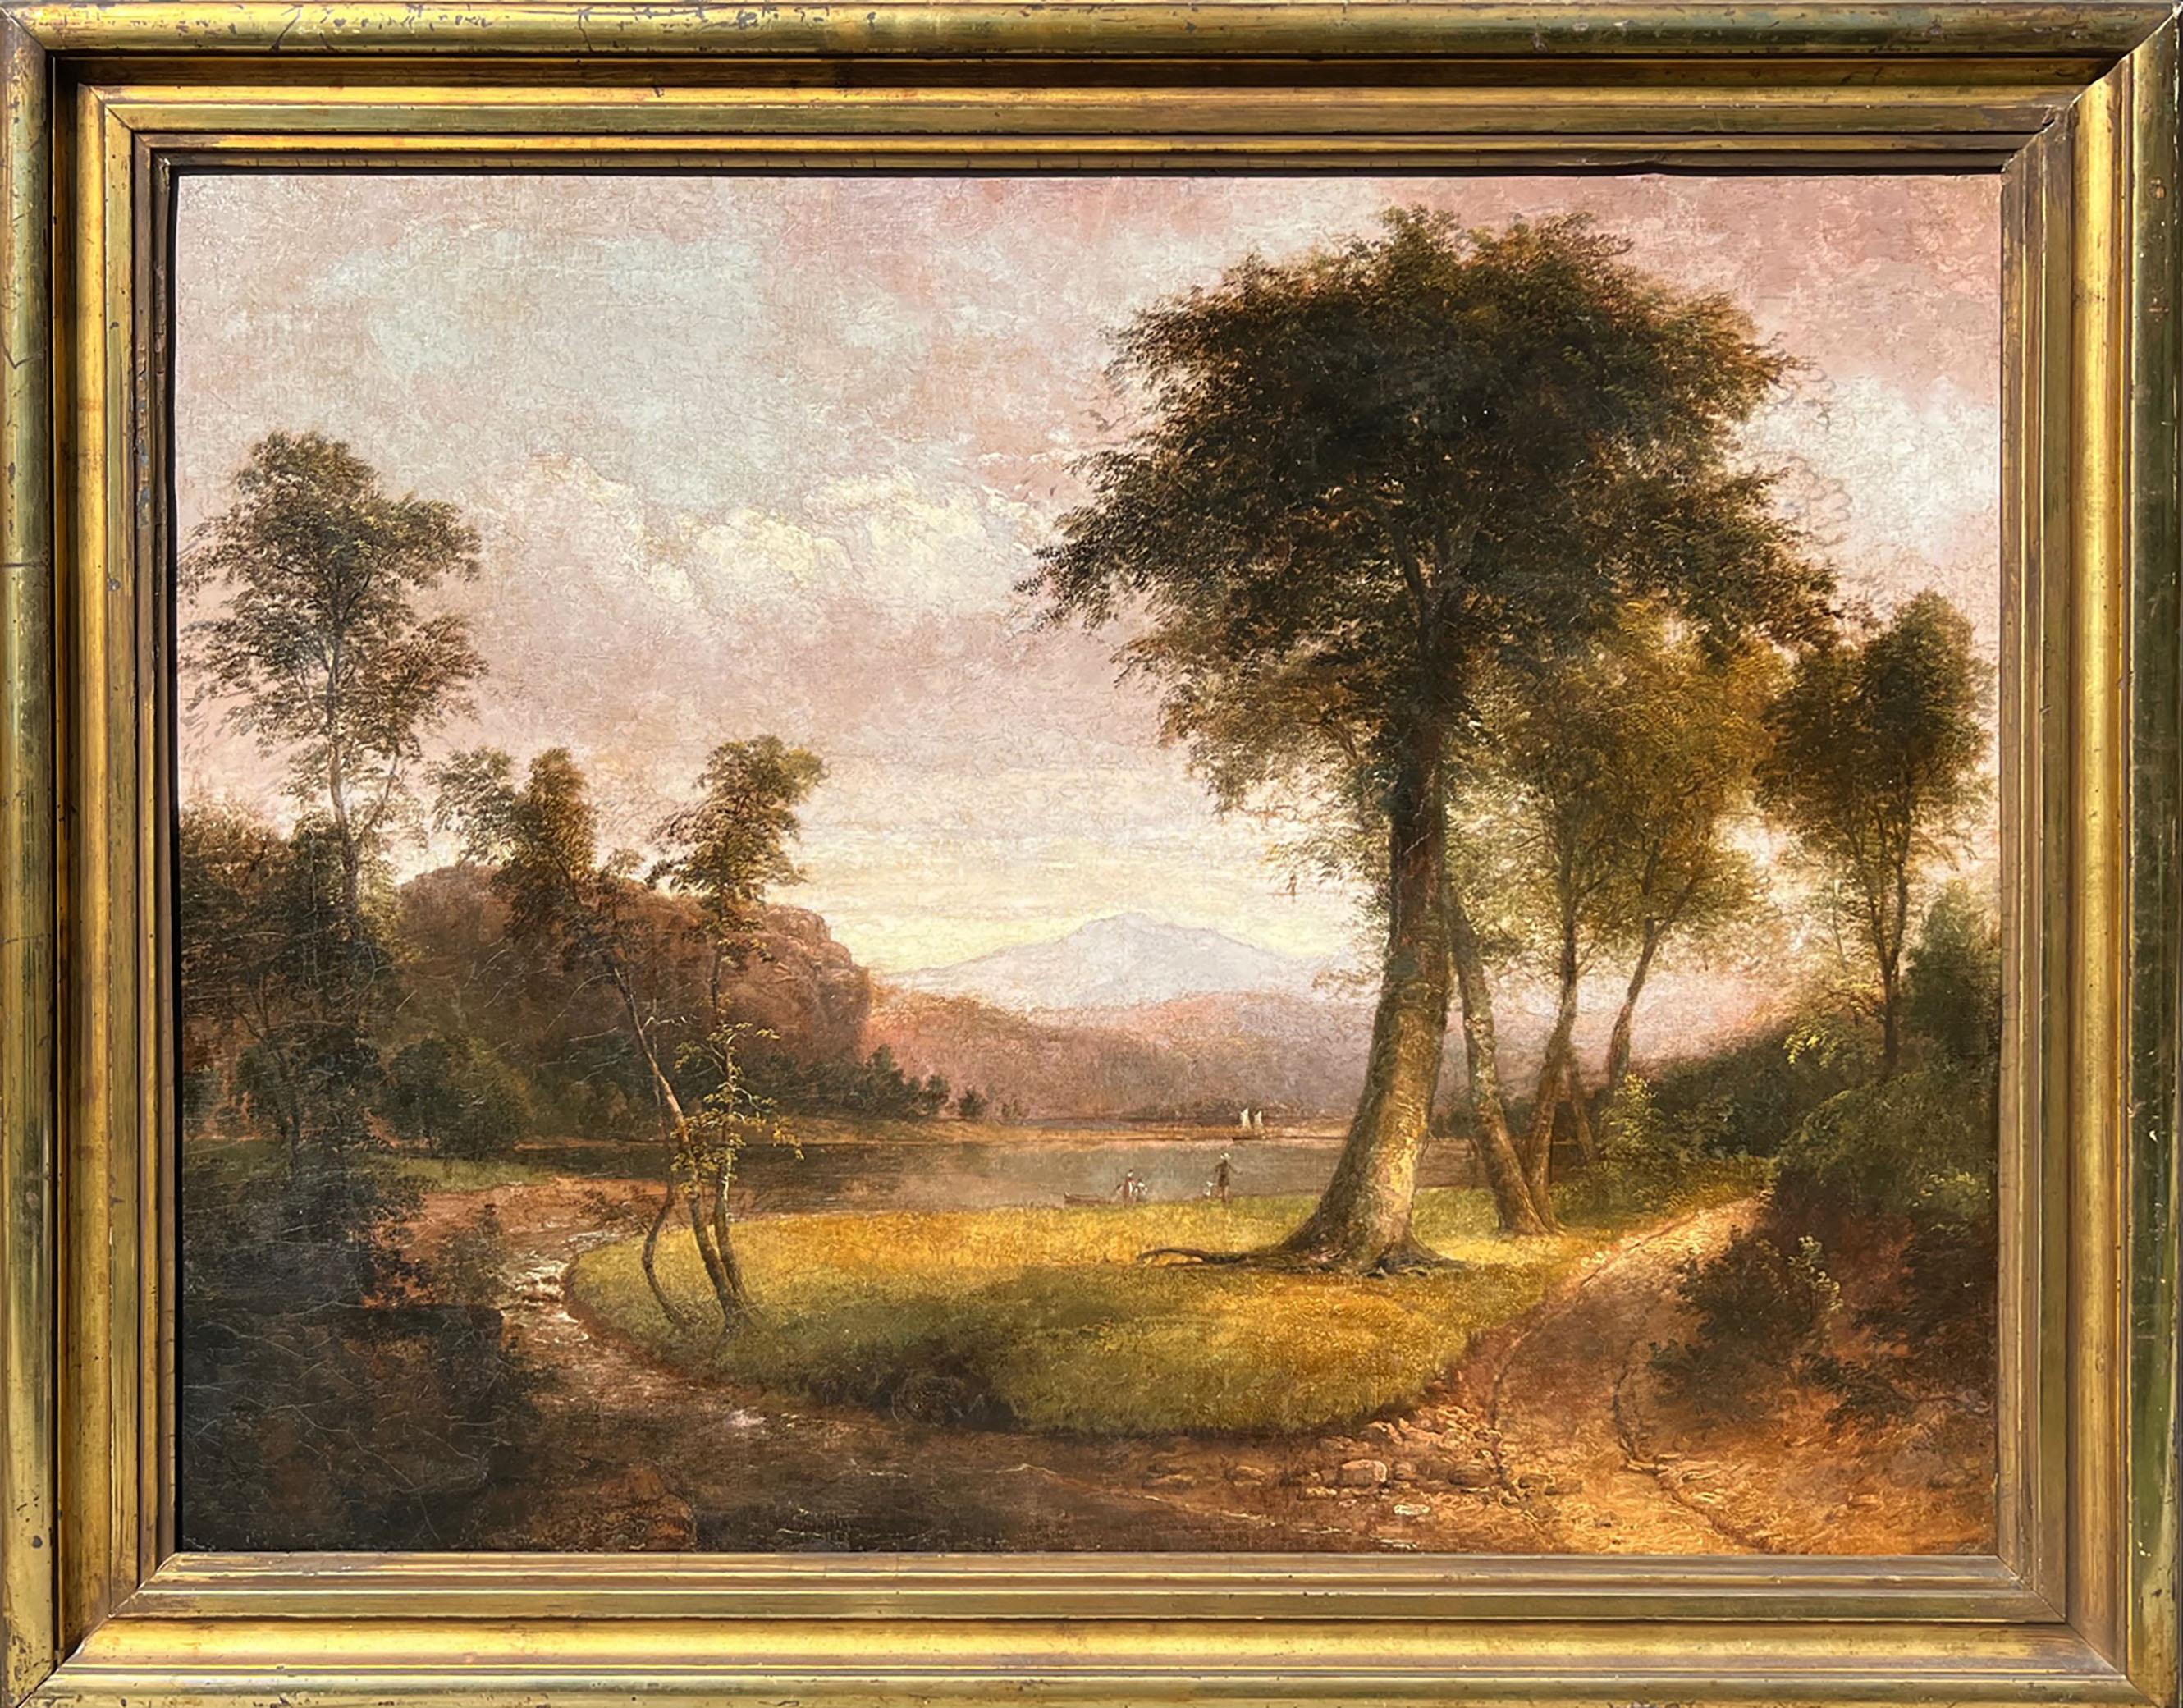 Catskill Landscape, 1836 by Thomas Doughty (American, 1793-1856)